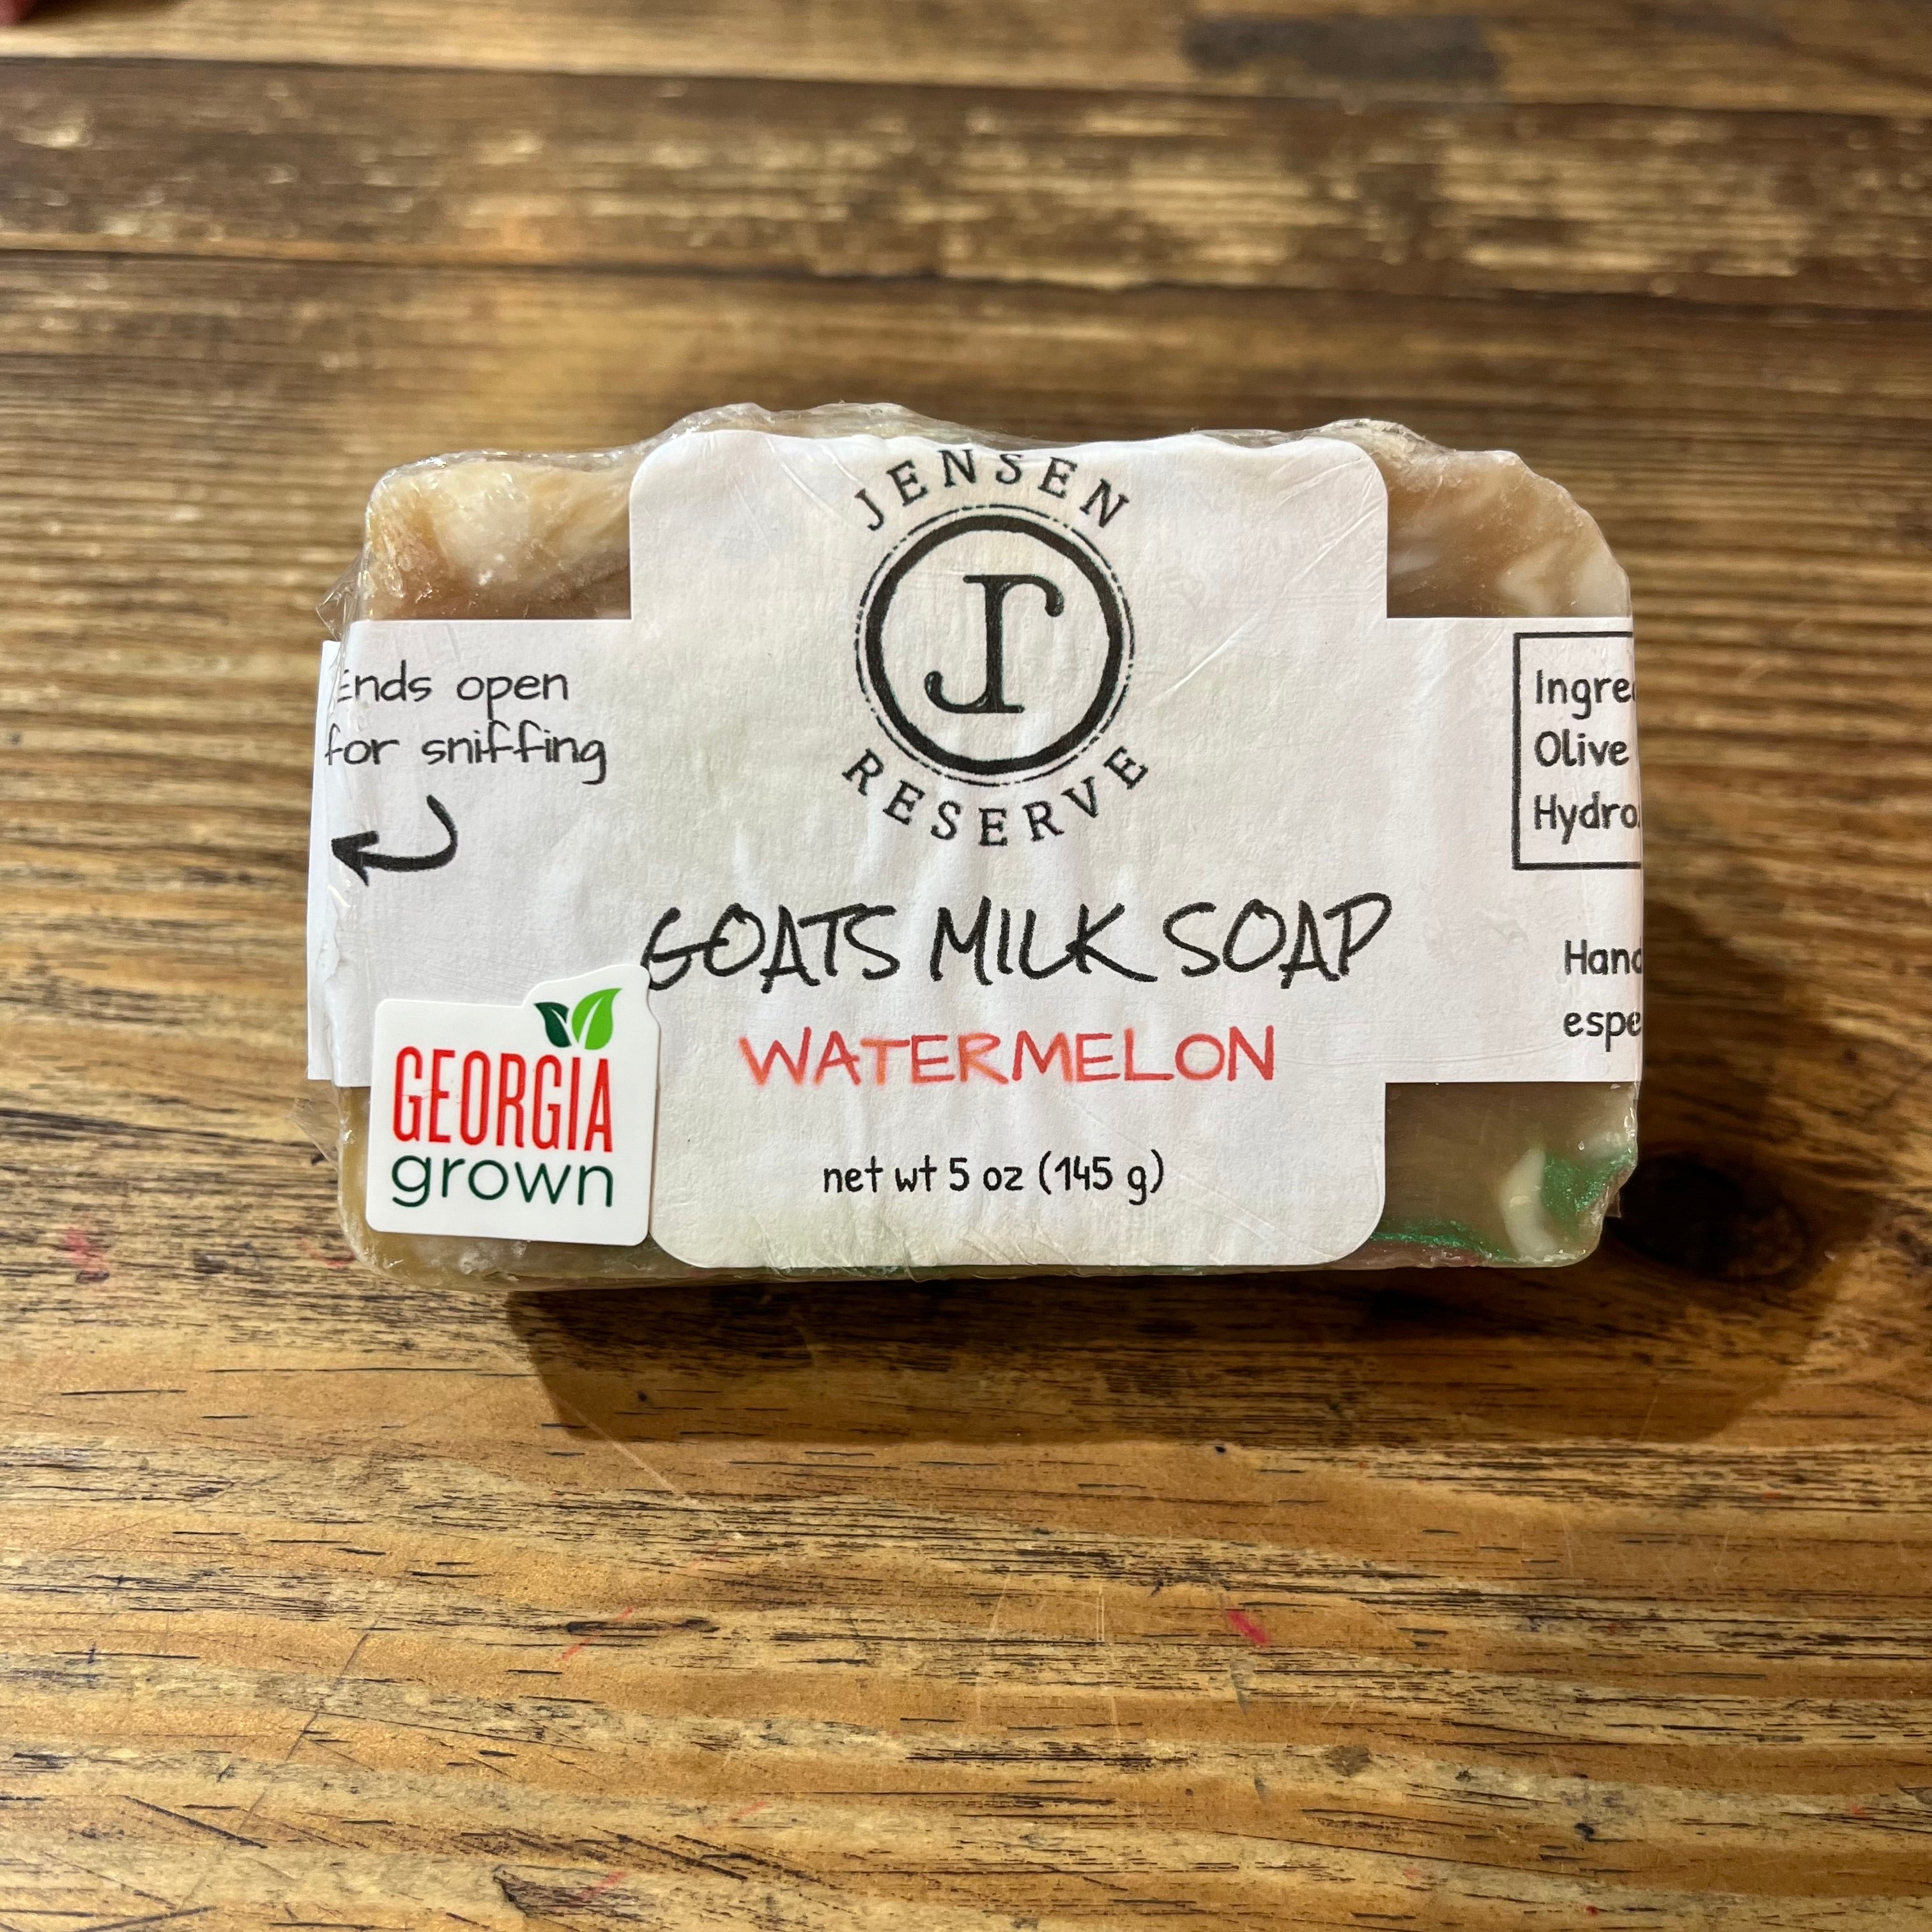 Goats Milk Soap featuring Meishan Lard